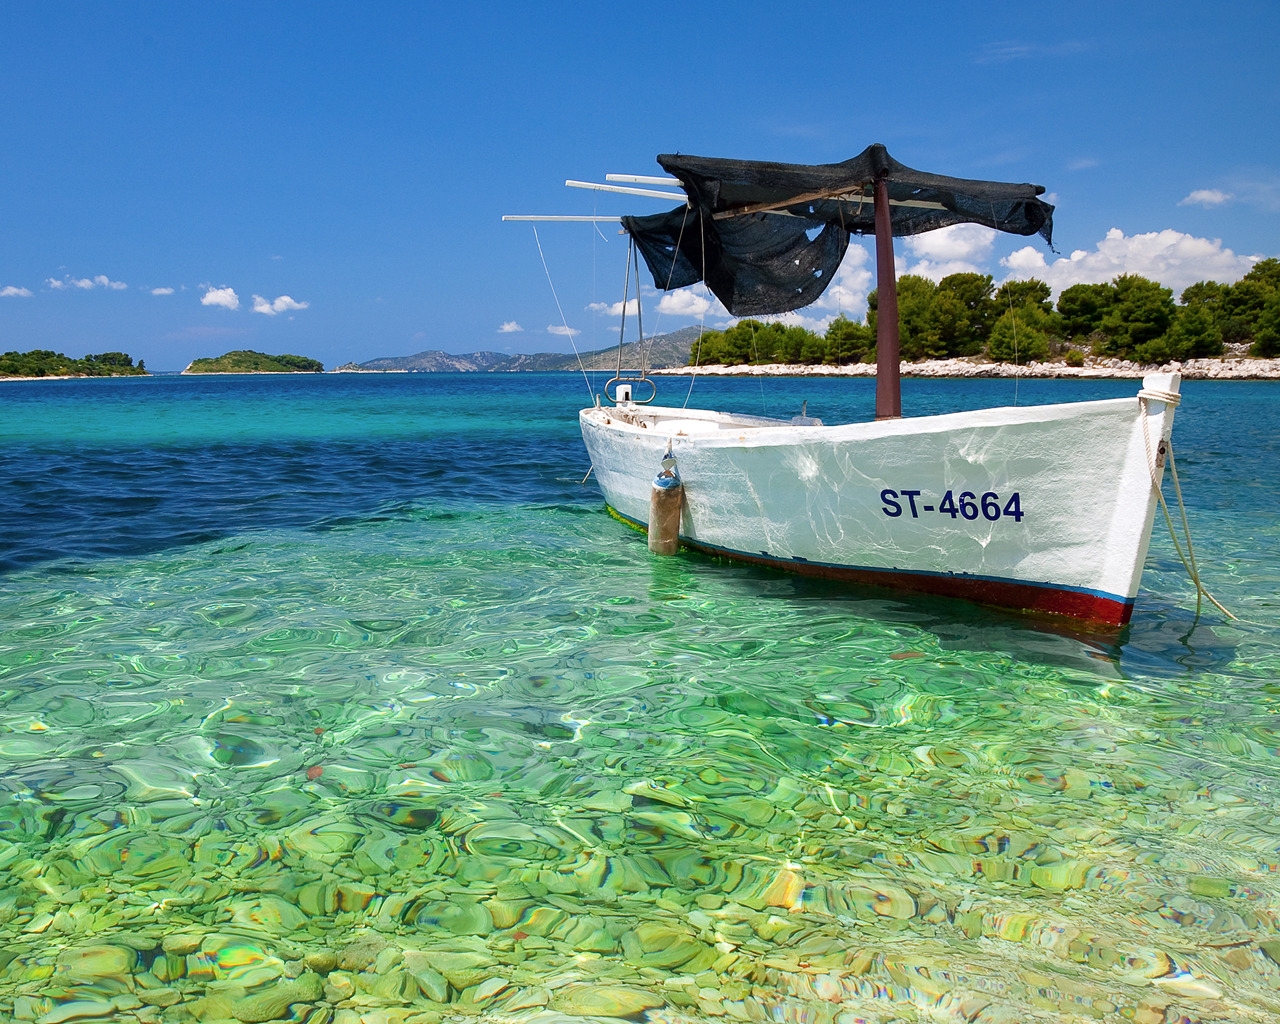 Croatian Boat for 1280 x 1024 resolution